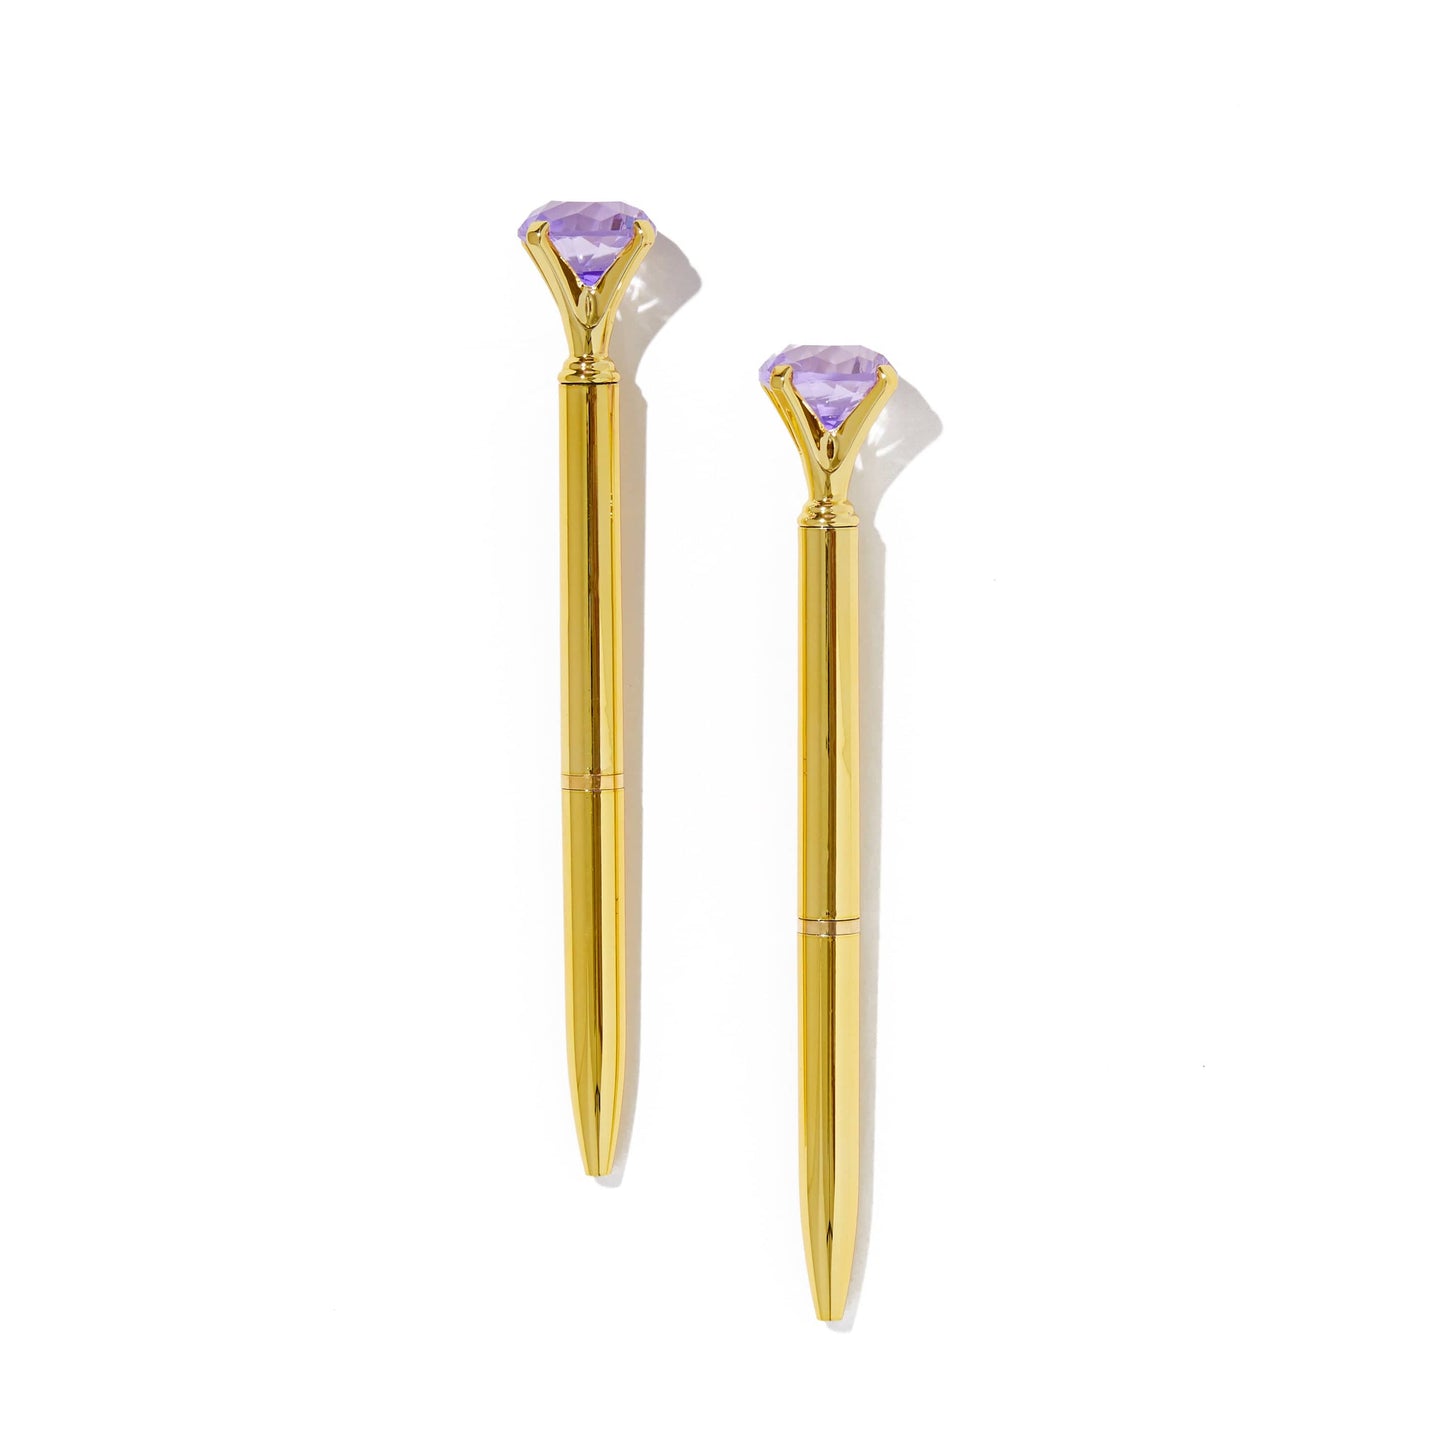 2PC Gold Crystal Pens - Purple